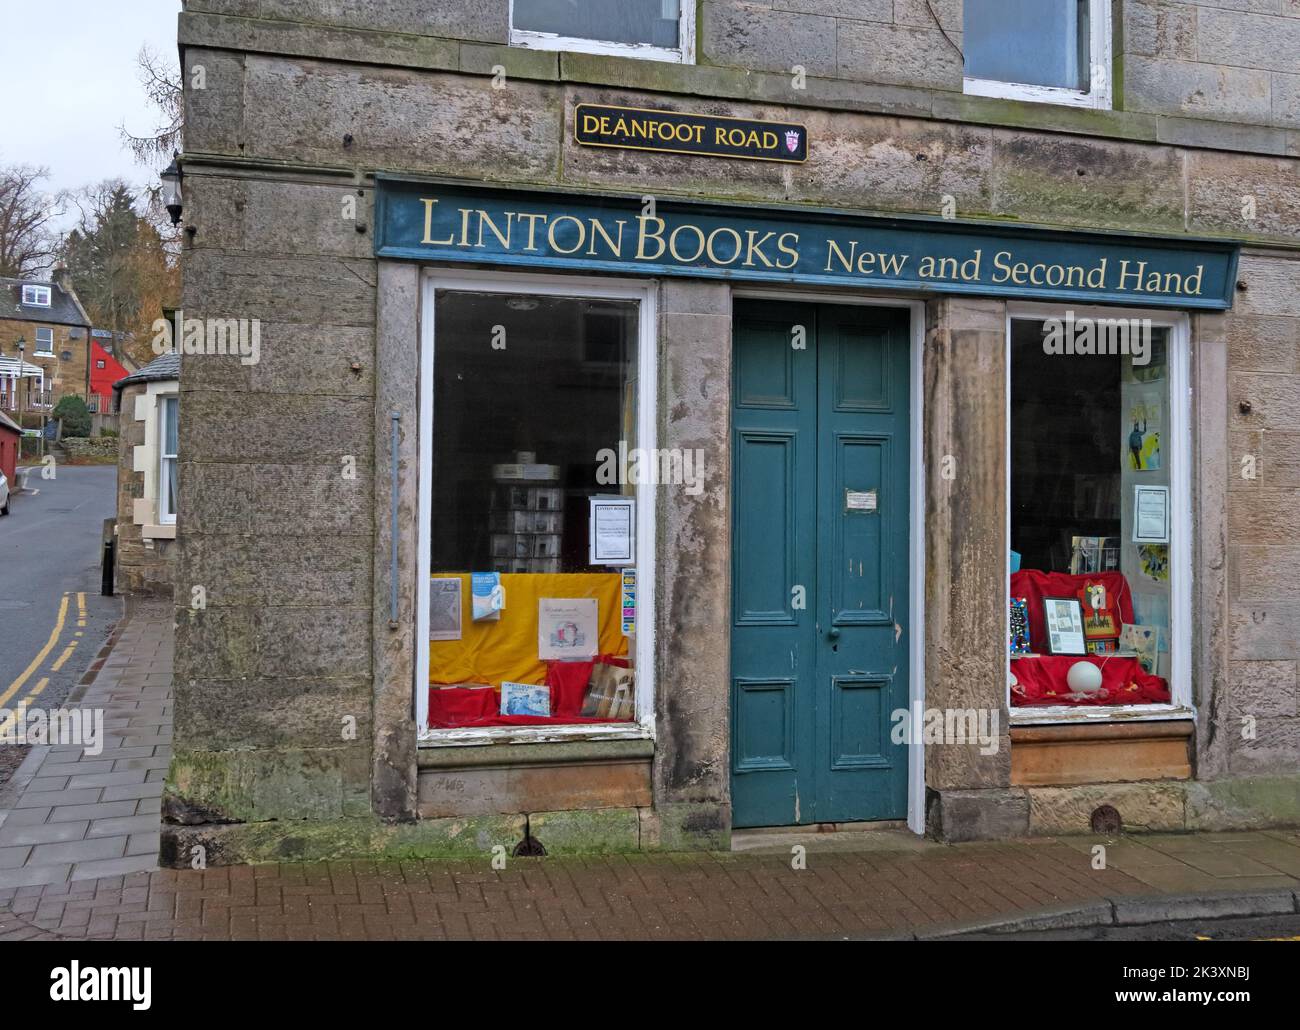 West Linton, Derek Watsons old Bookshop ,Deanfoot rd, West Linton, Scotland, UK,  EH46 7DX - Linton Books Stock Photo